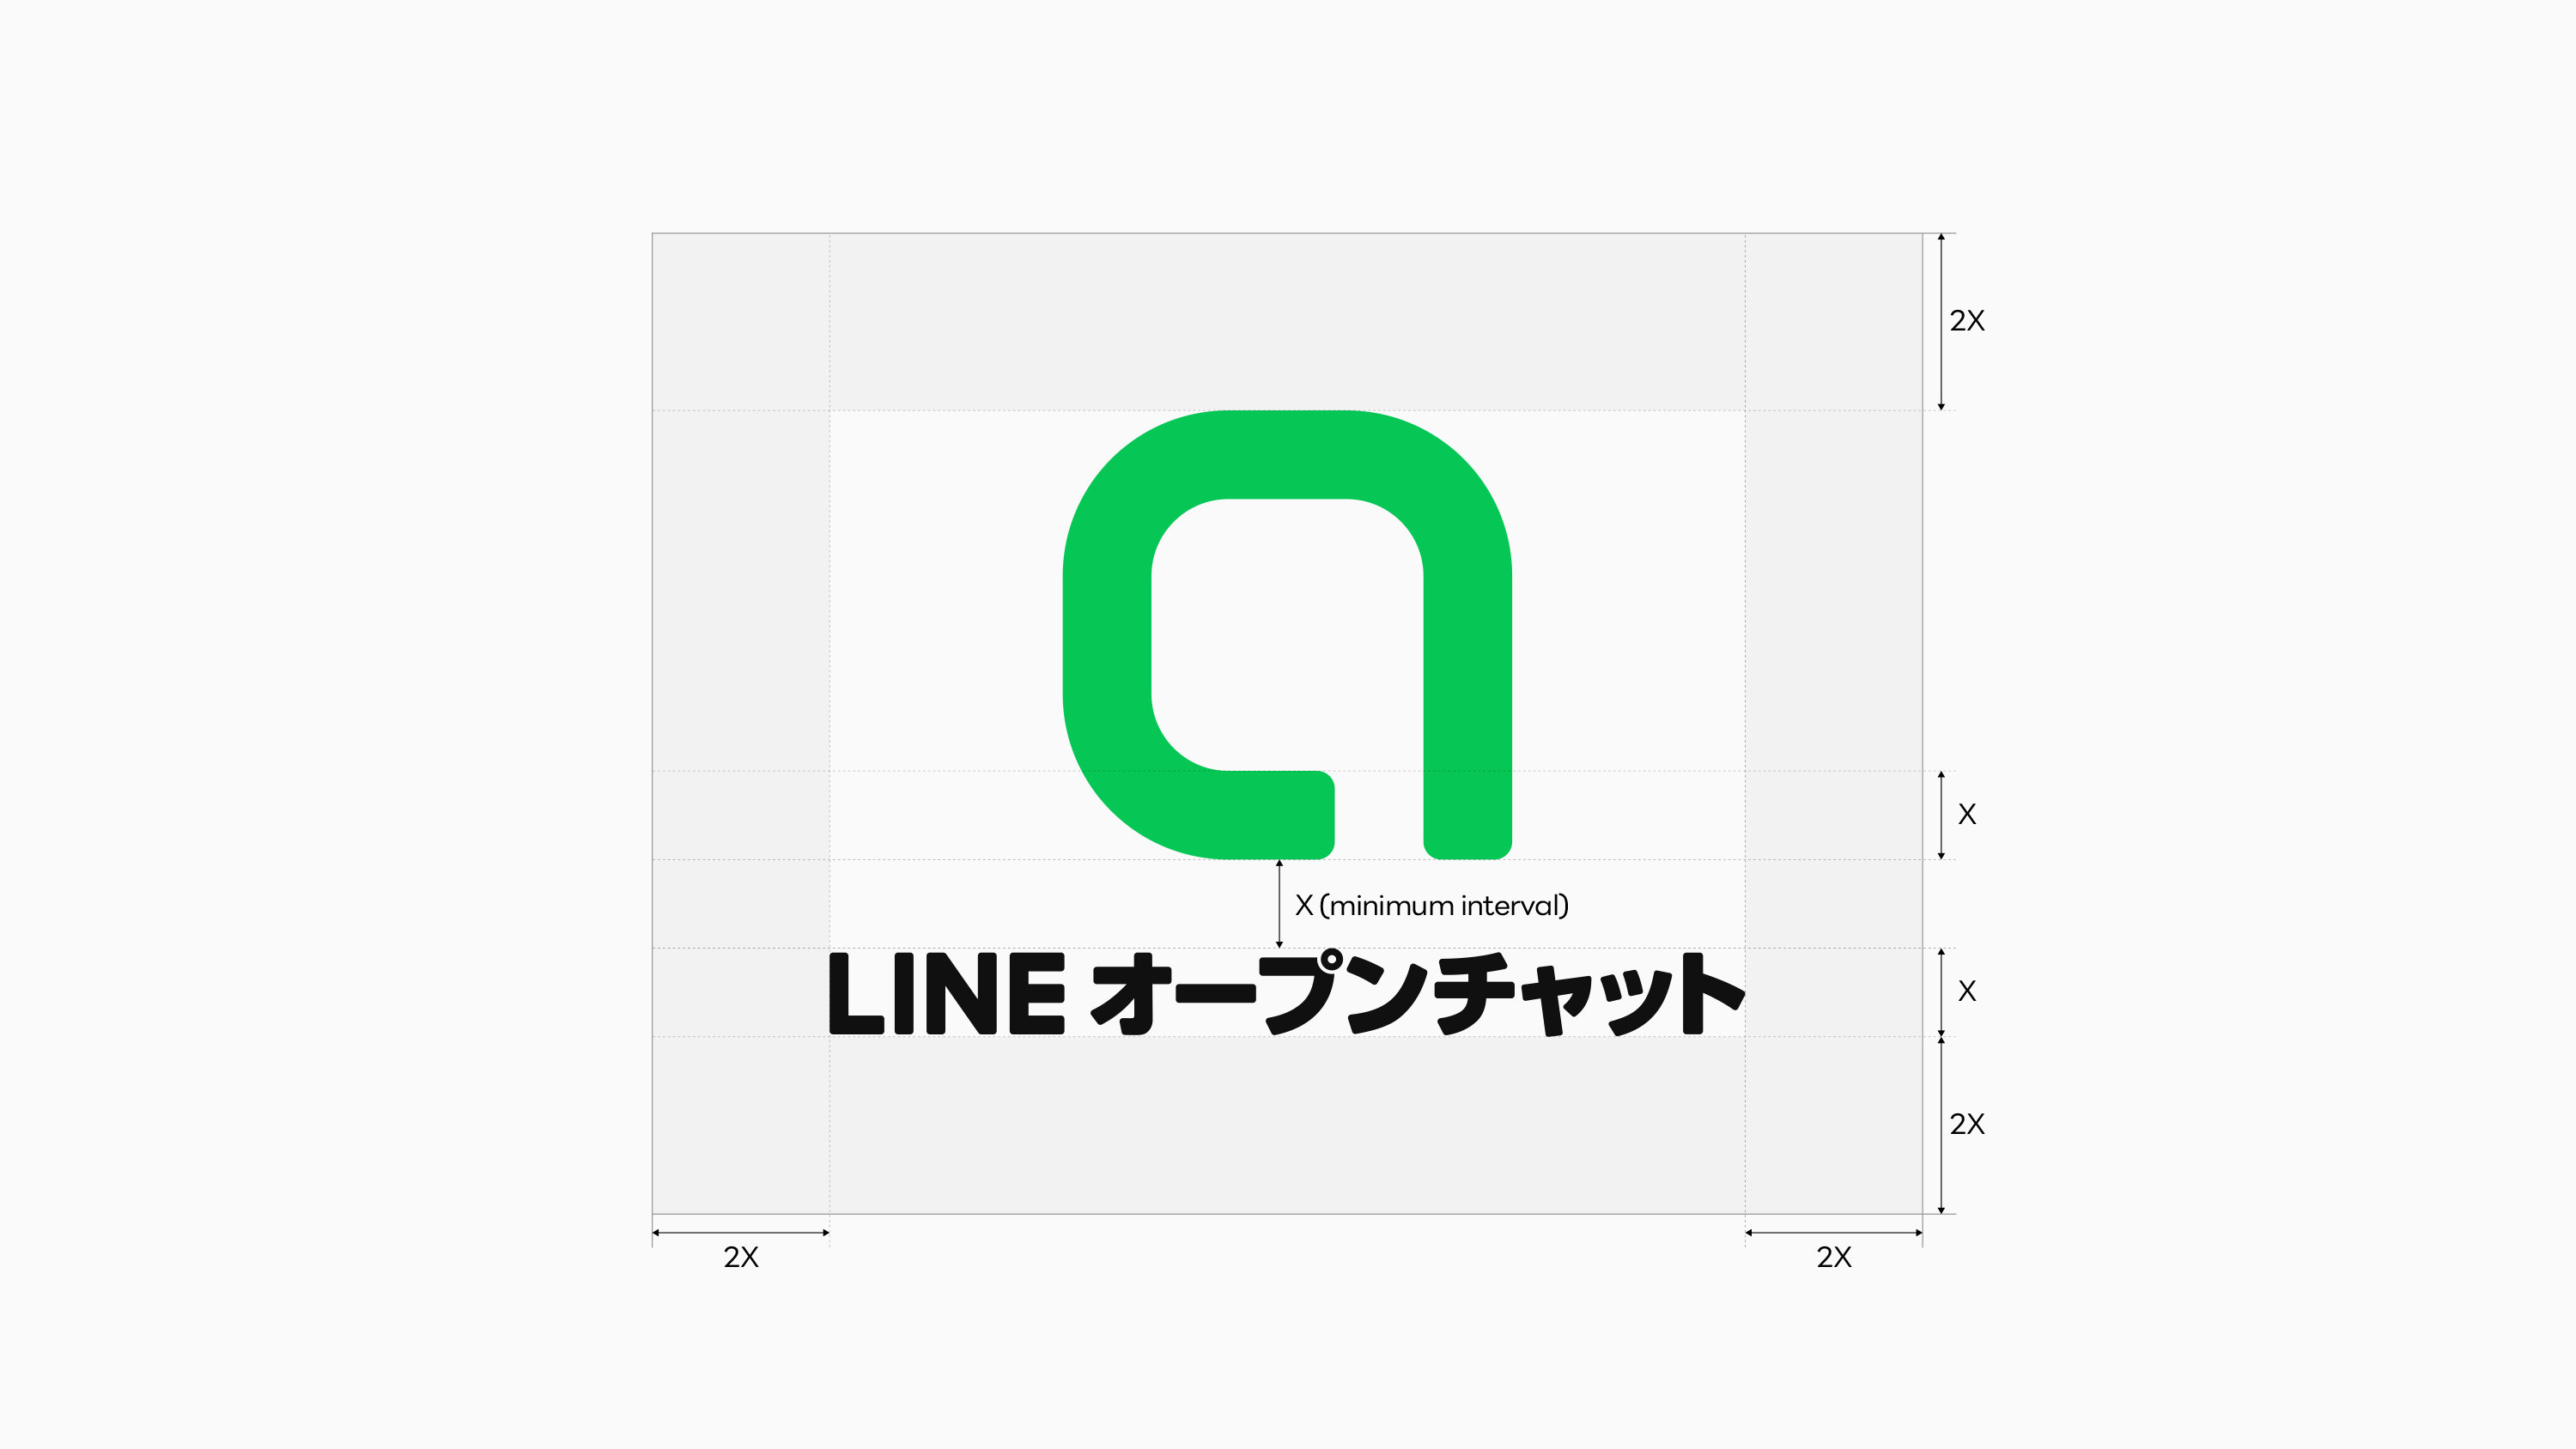 Line Creative Line オープンチャット